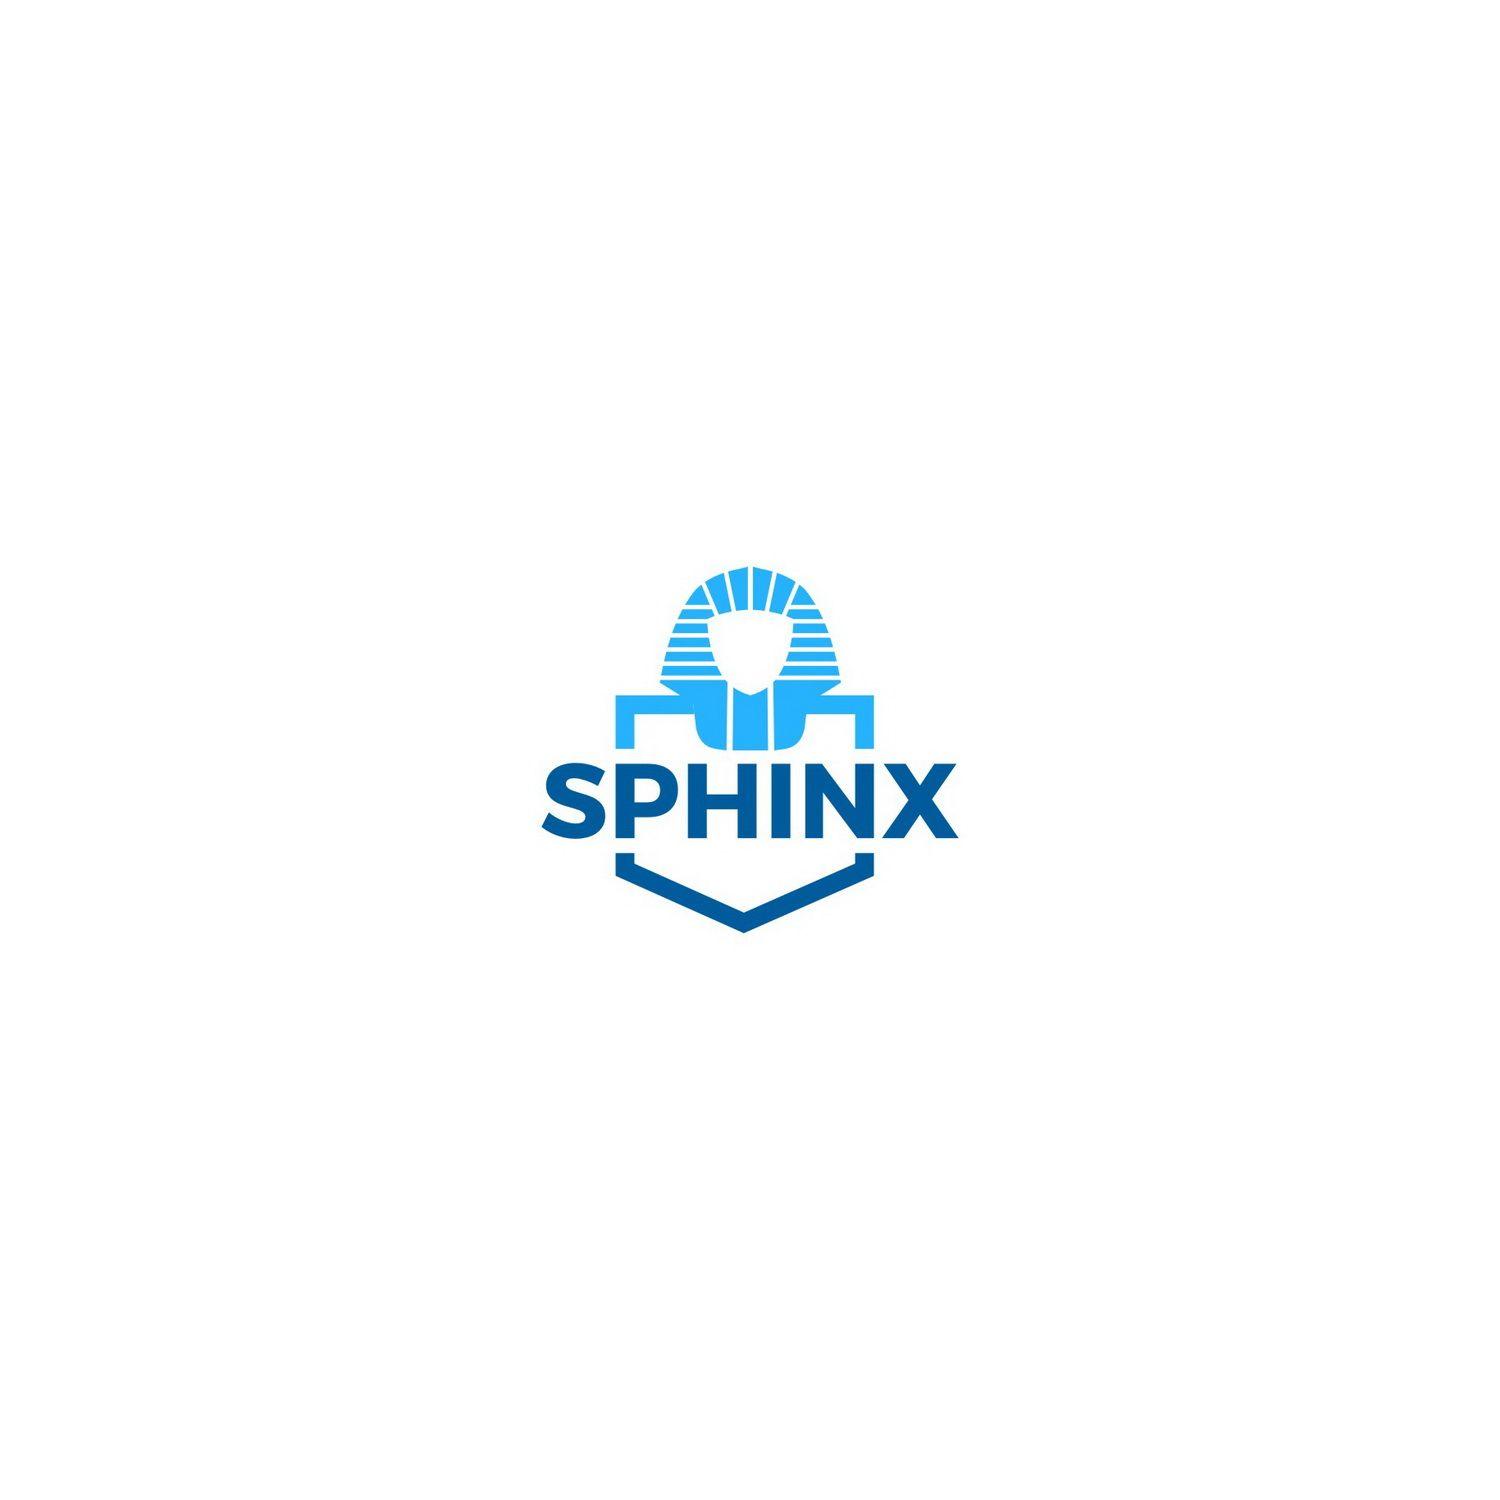 Sphinx Logo - Logo Design for SPHINX by trisnant | Design #20710796